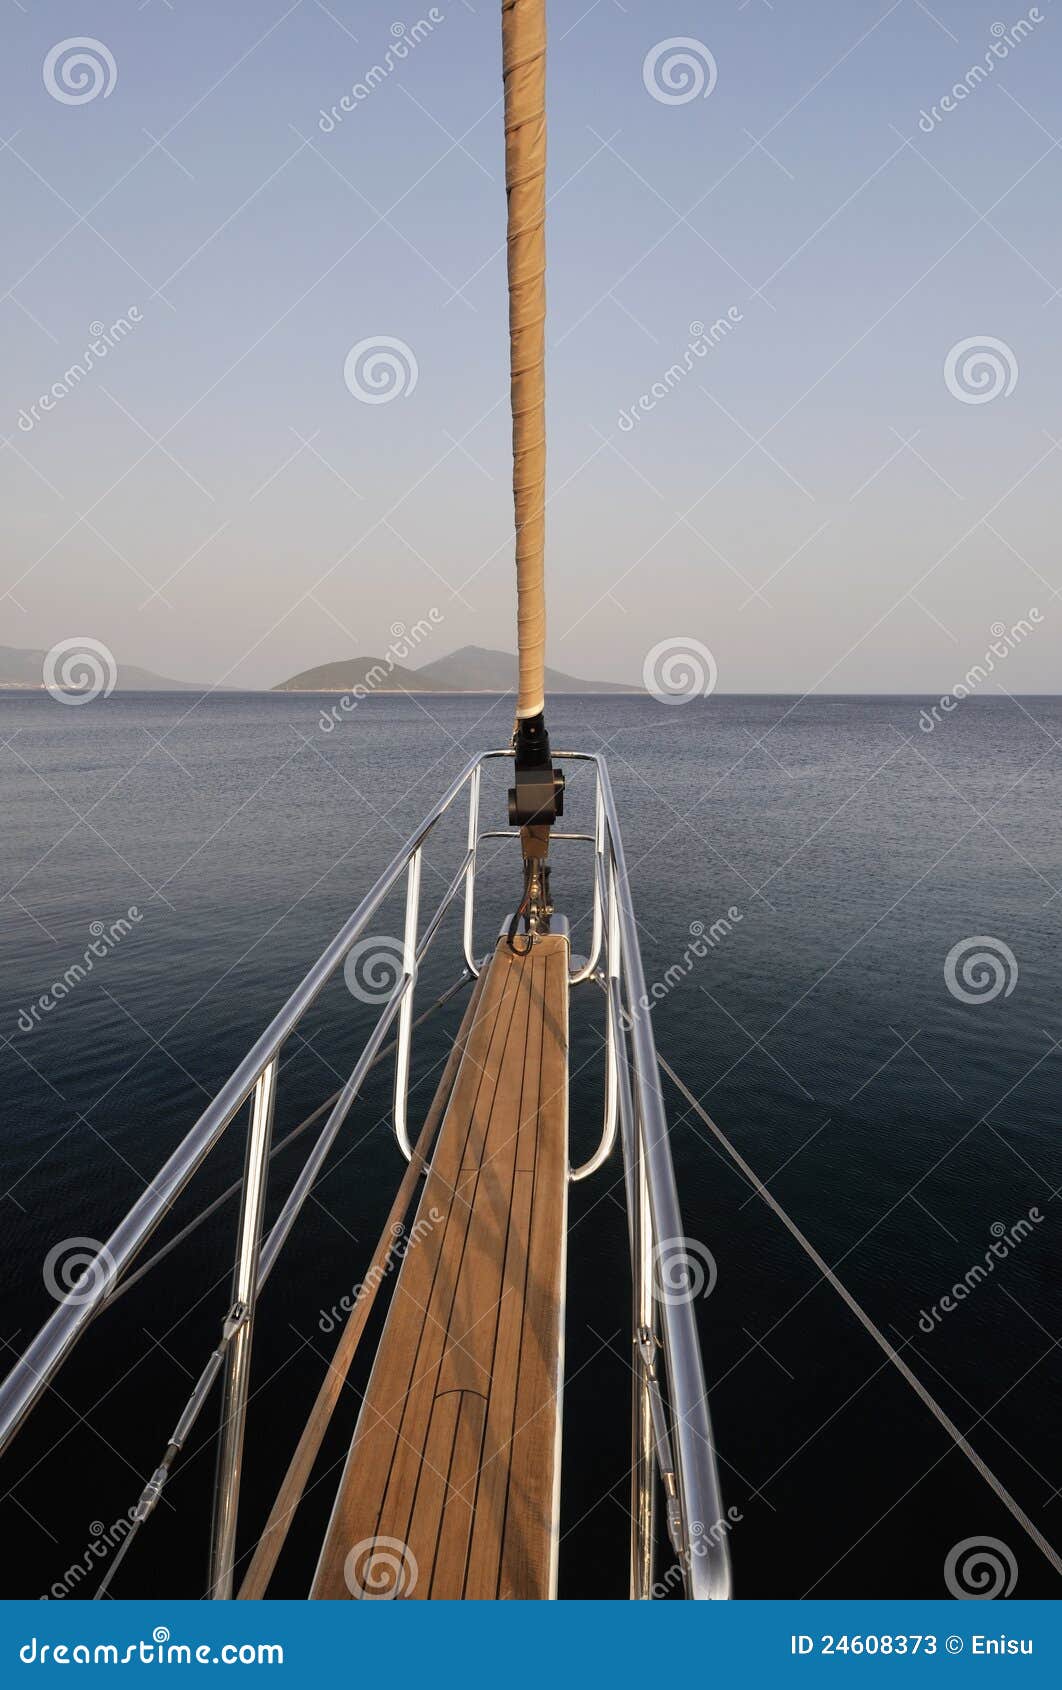 Deck of sailboat stock image. Image of mediterranean ...